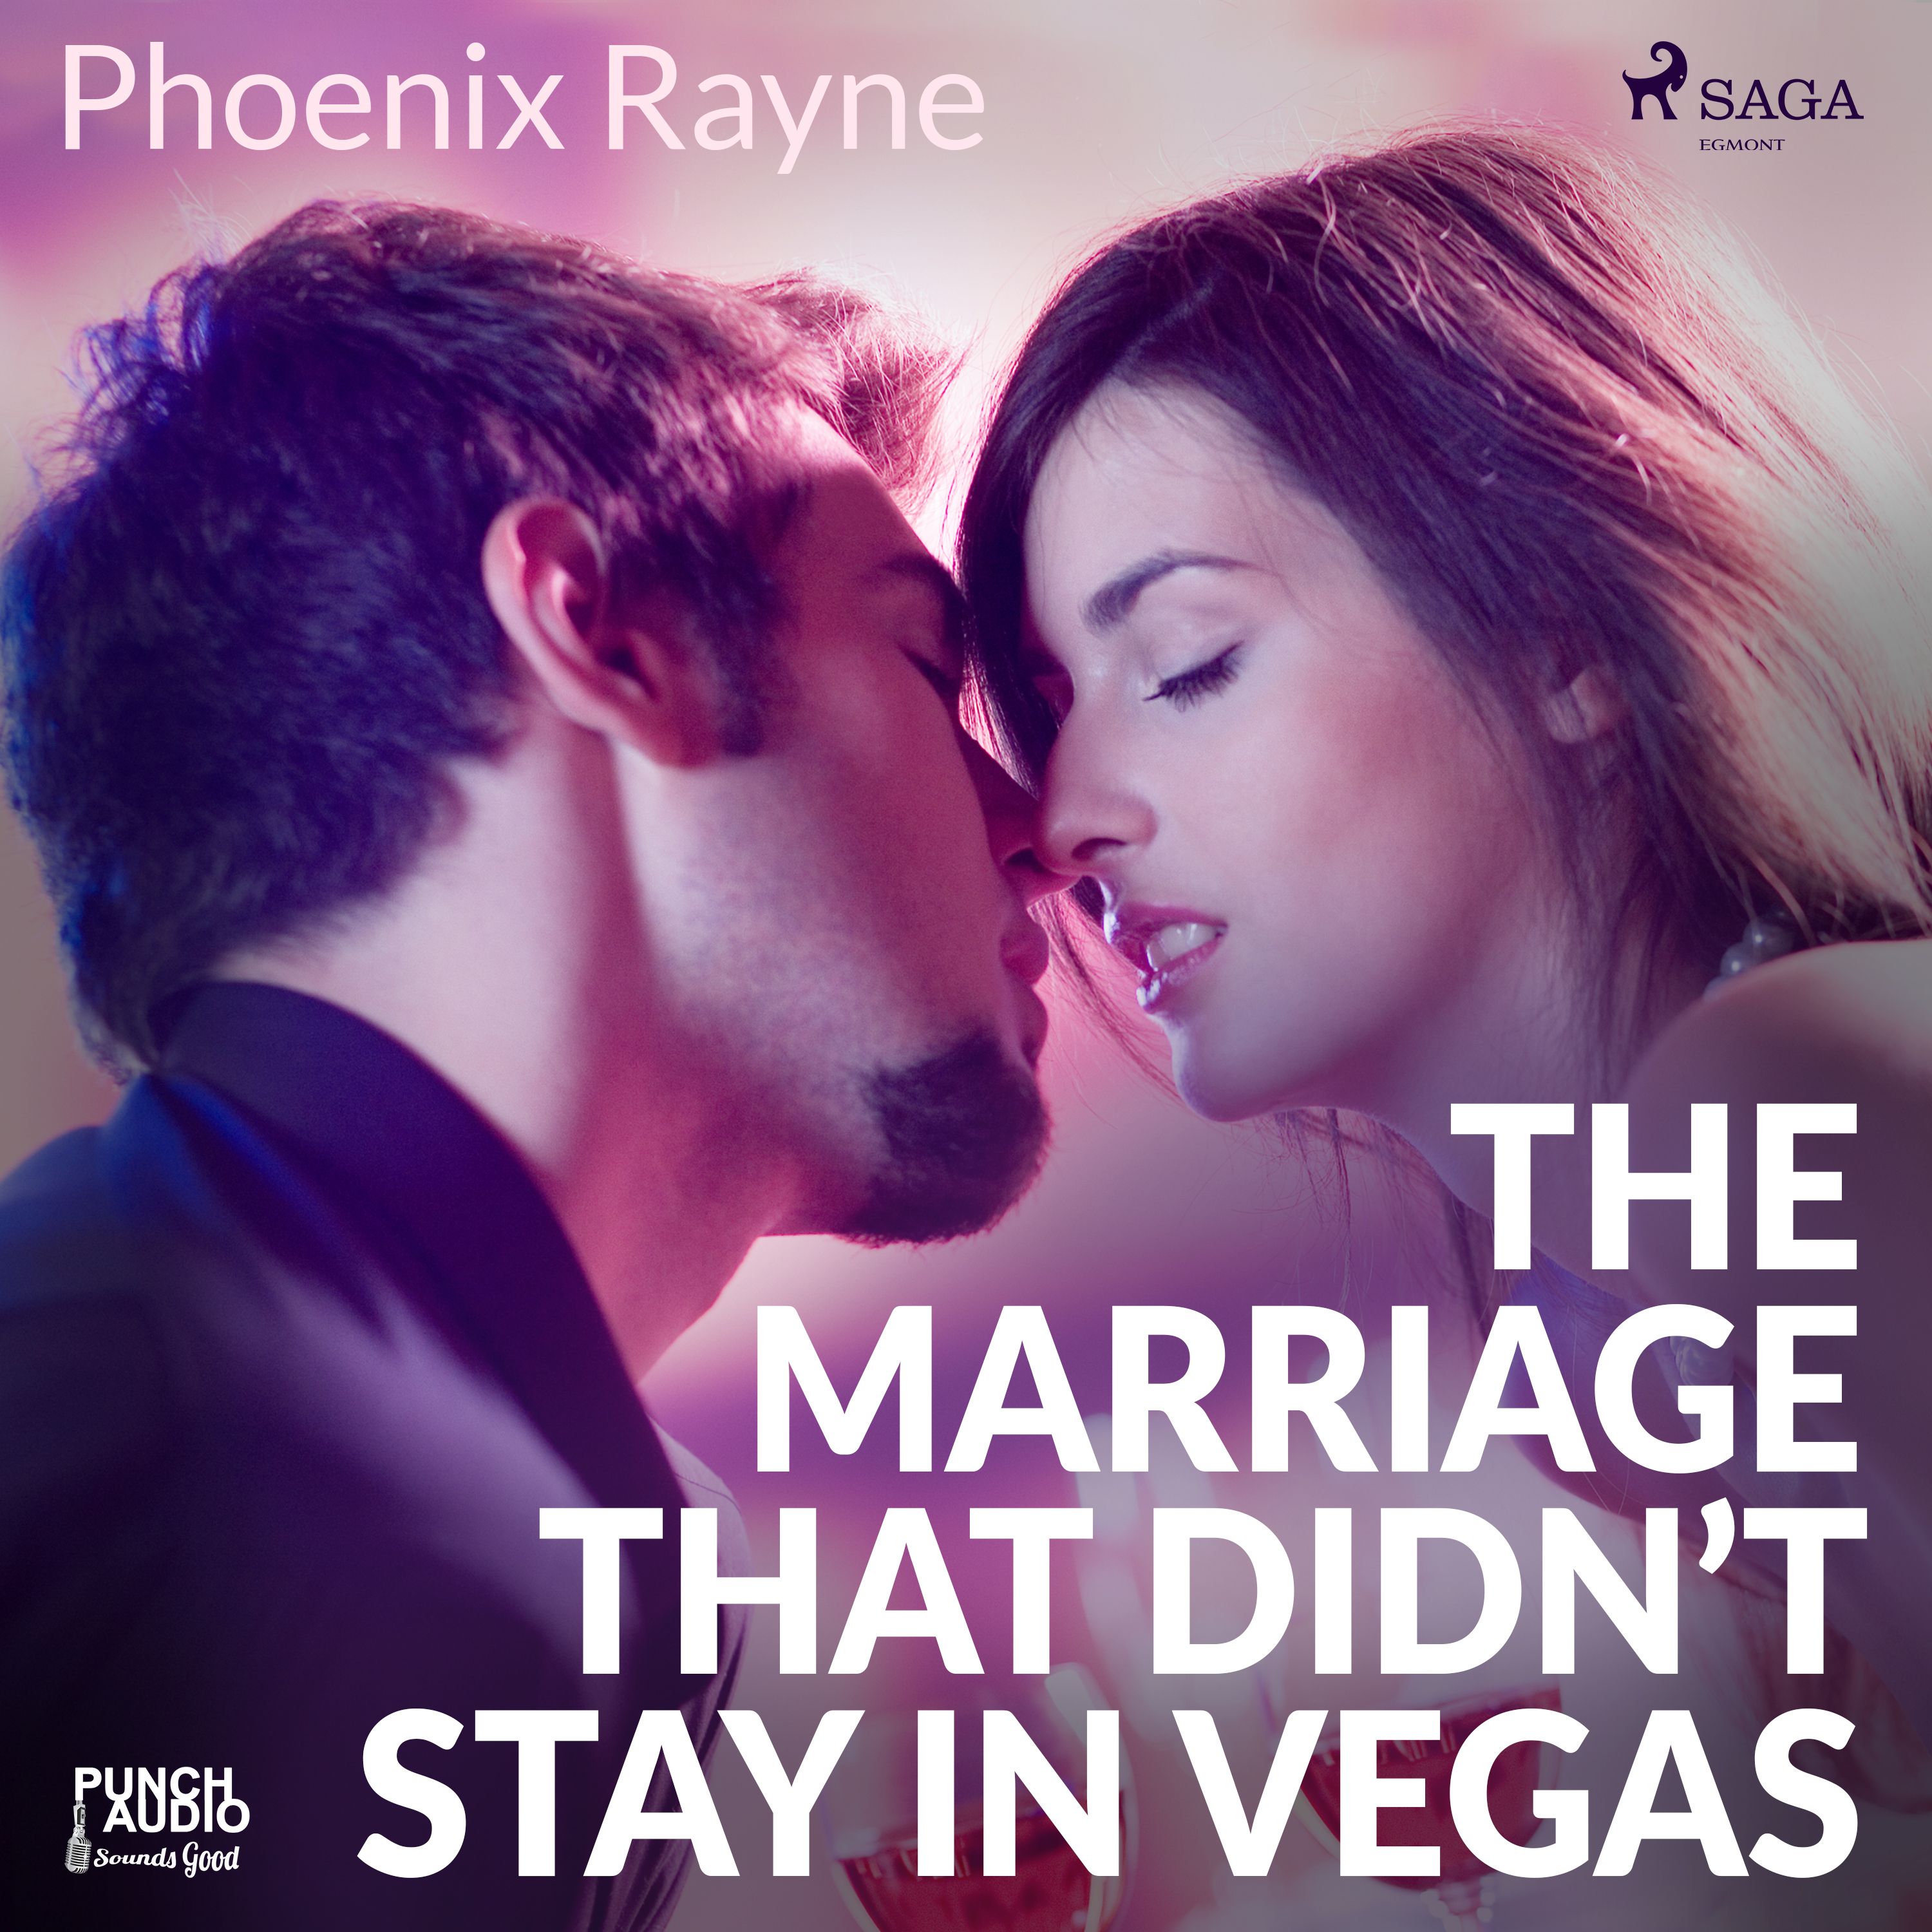 The Marriage That Didn’t Stay In Vegas, ljudbok av Phoenix Rayne